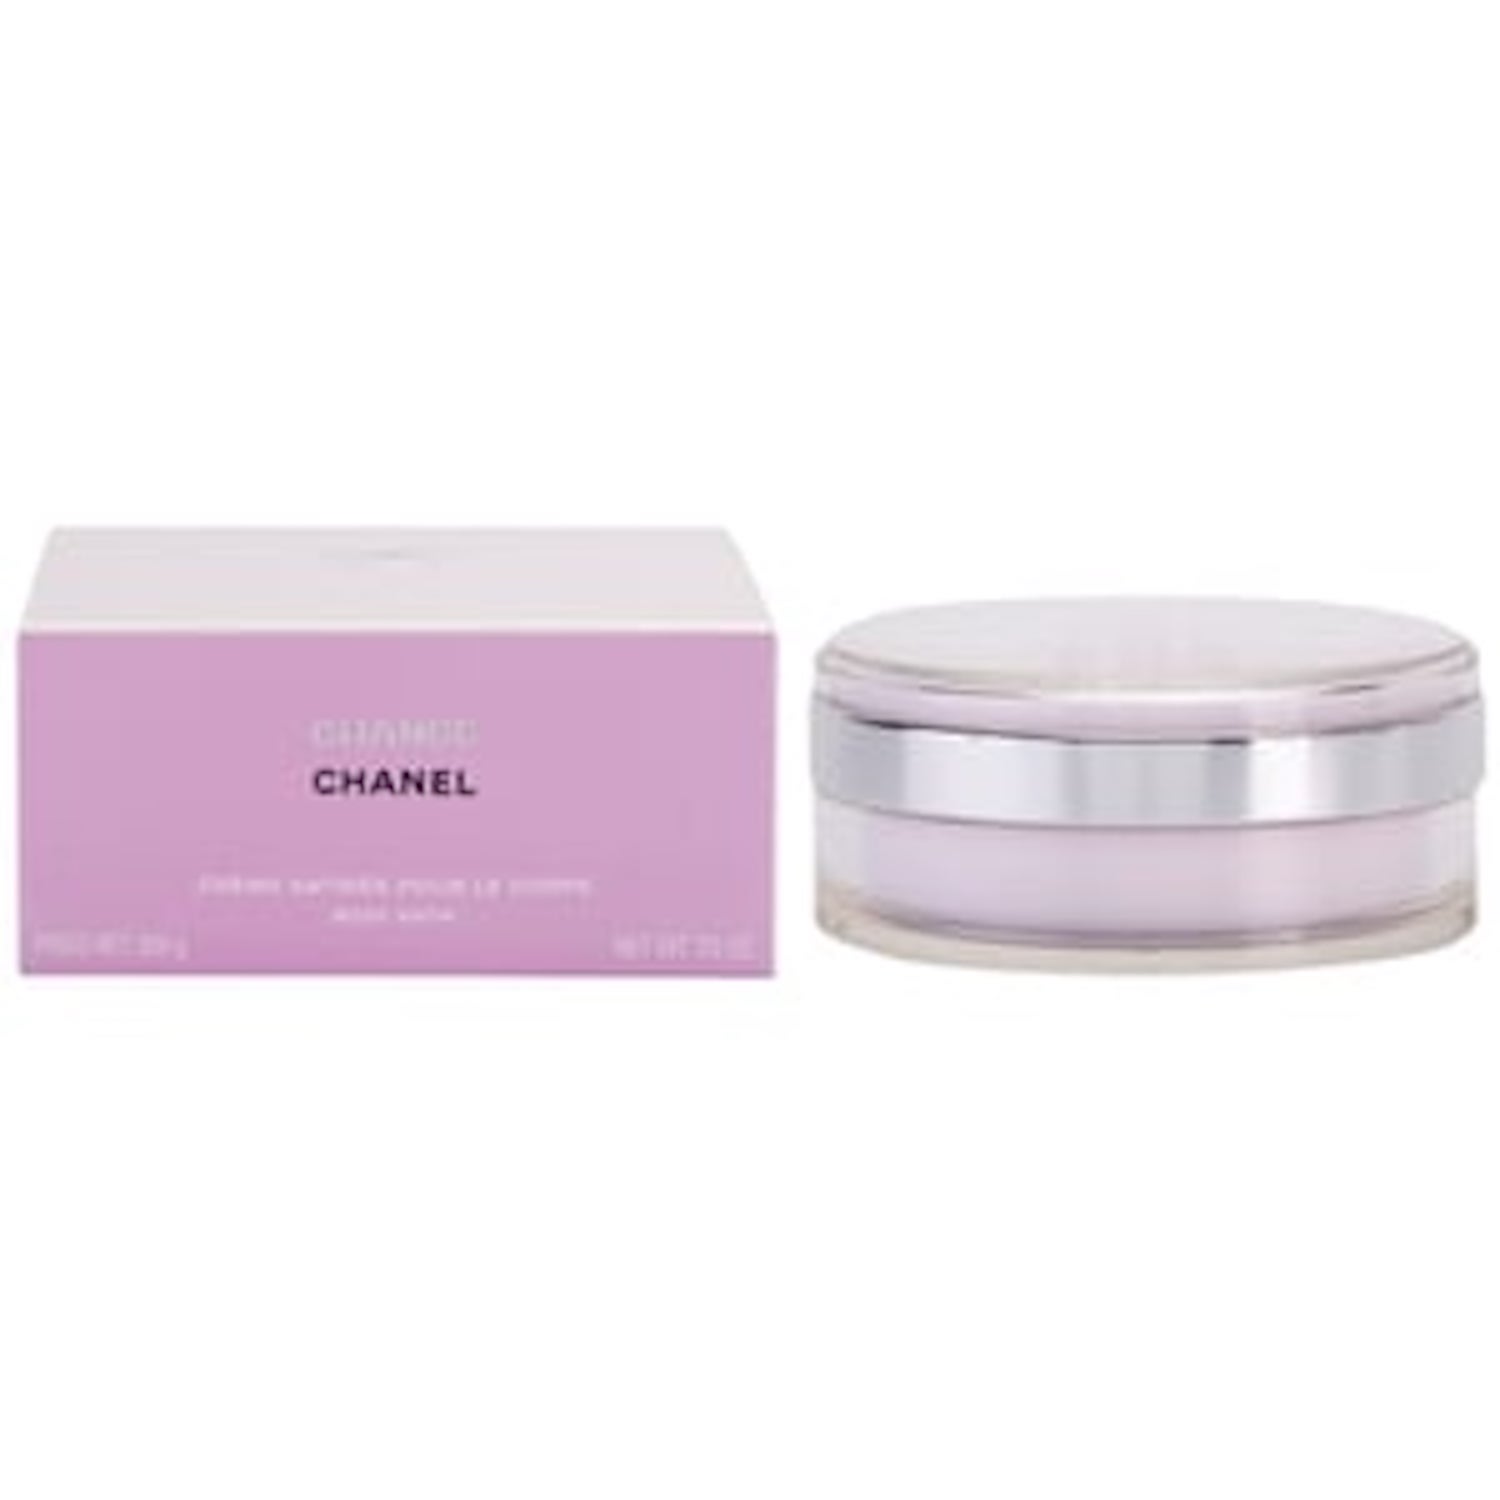 CHANEL CHANCE Body Satin  Chanel perfume, Chanel fragrance, Chanel creme